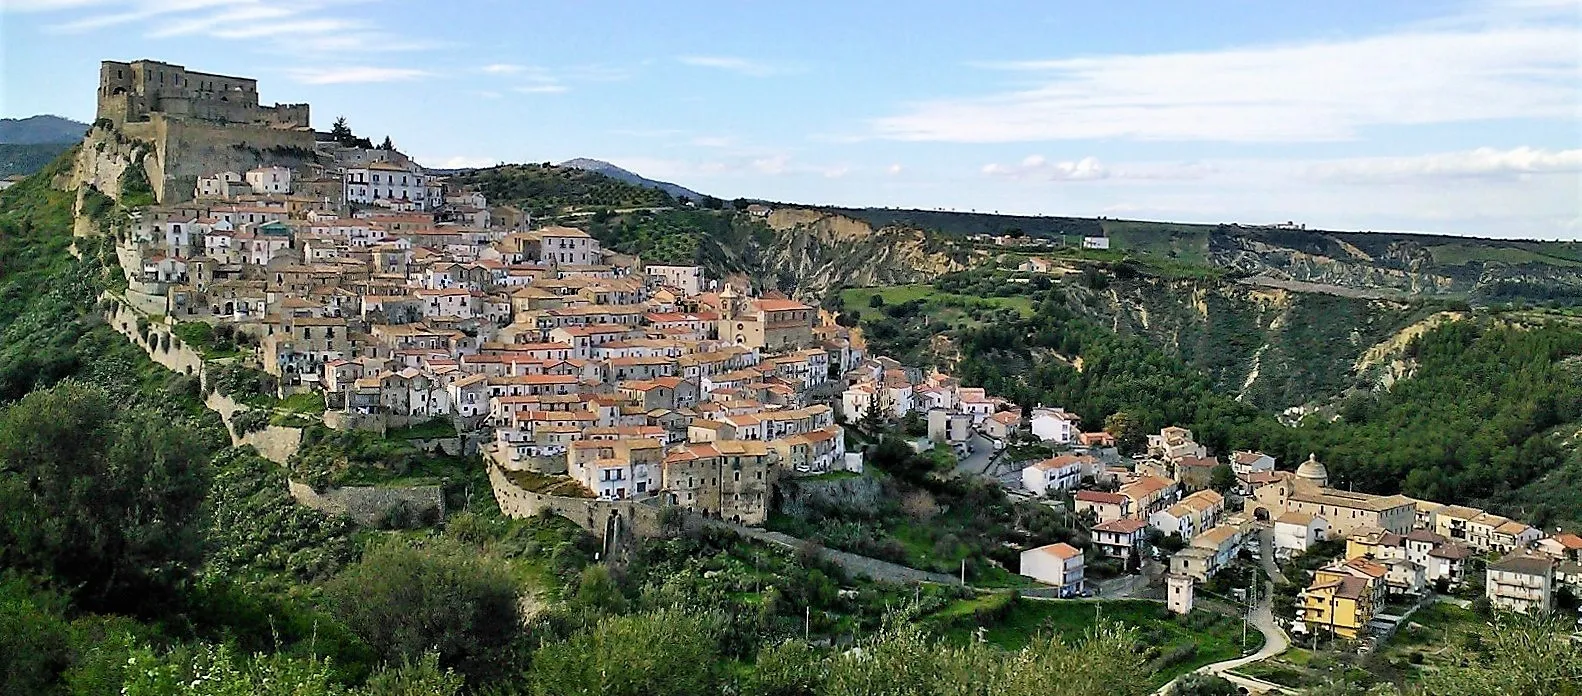 Photo showing: Rocca Imperiale - Vista panoramica del borgo medievale